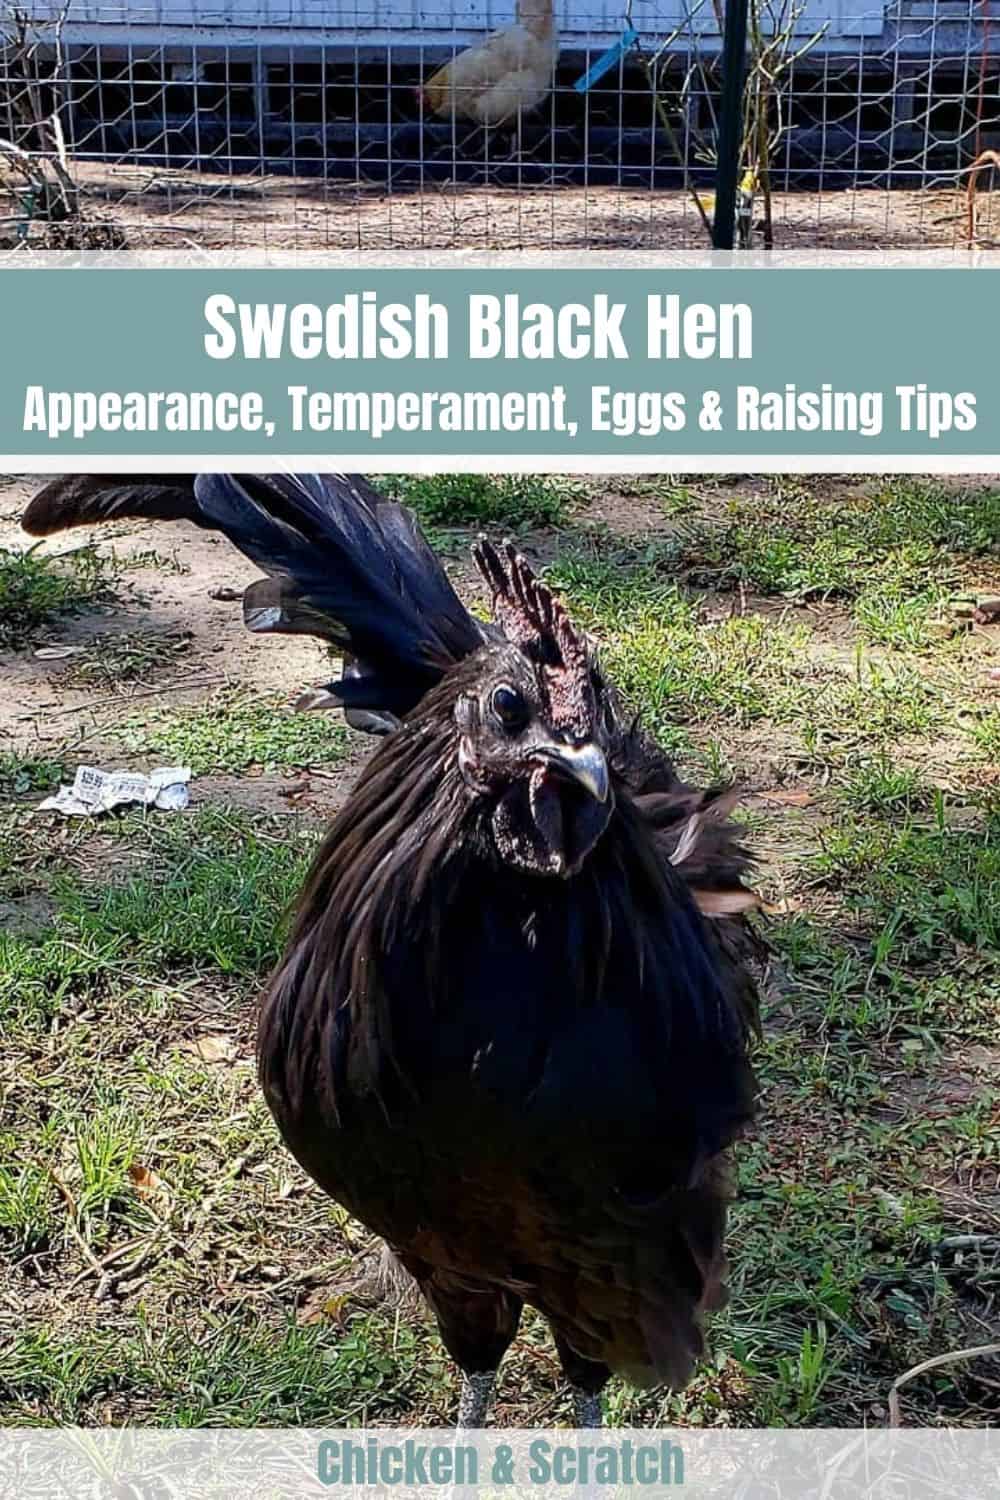 Swedish Black Hens